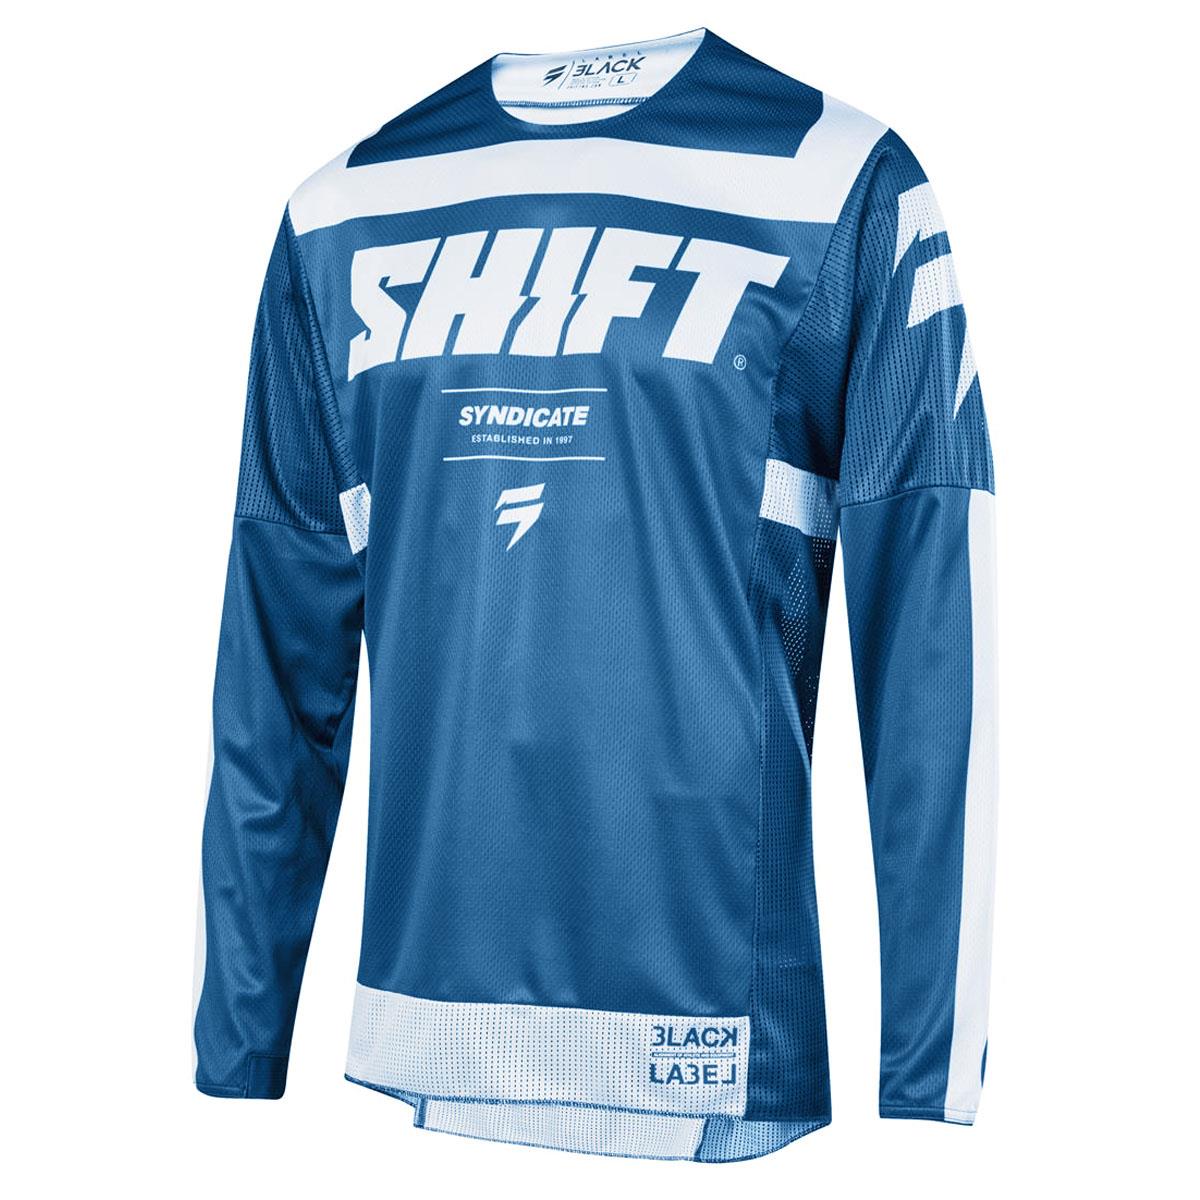 Shift Jersey 3lack Label Strike Blue